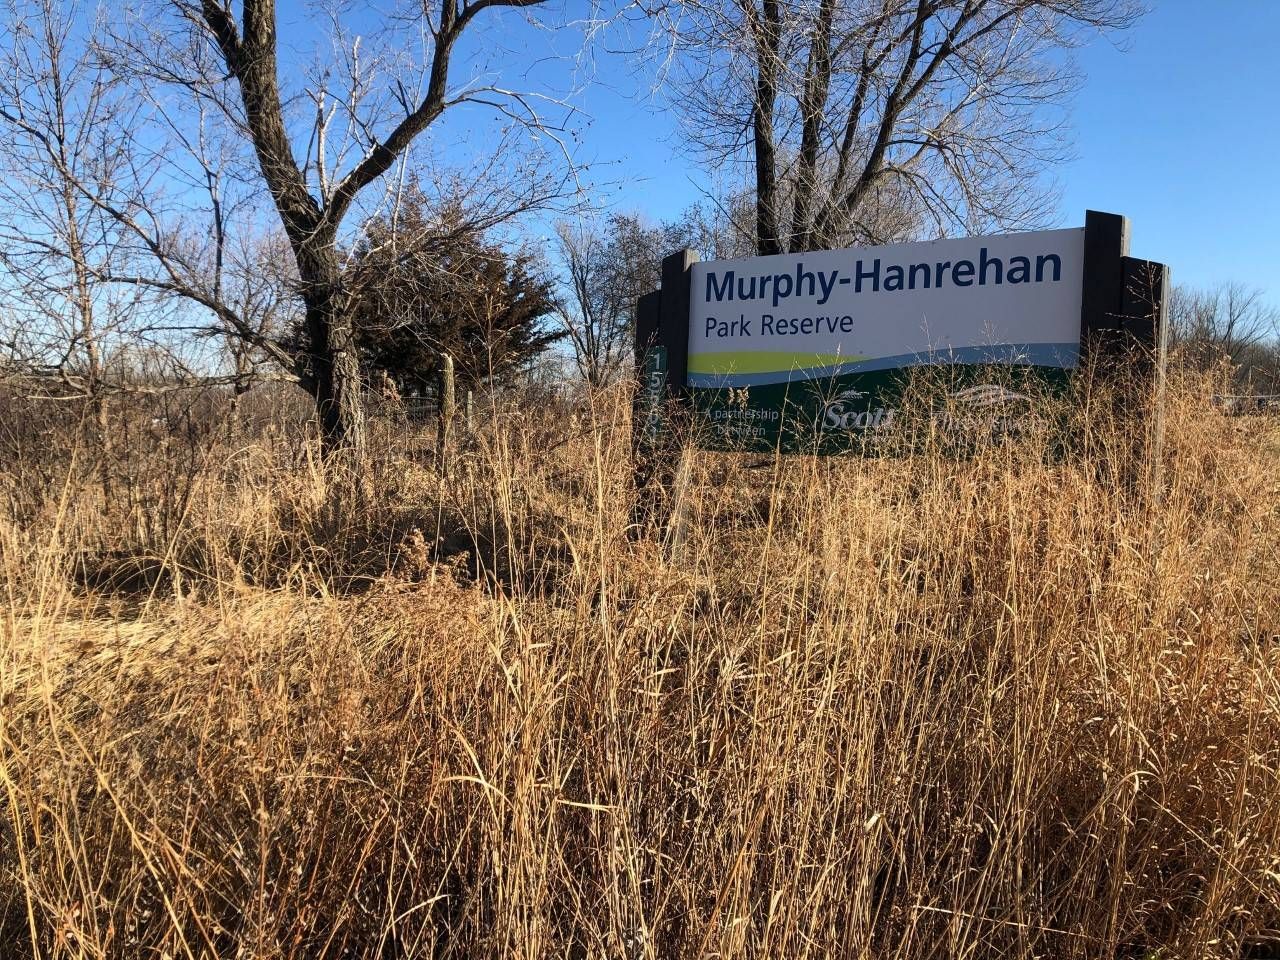 Murphy-Hanrehan Park Reserve is located at 15501 Murphy Lake Blvd, Savage, MN.